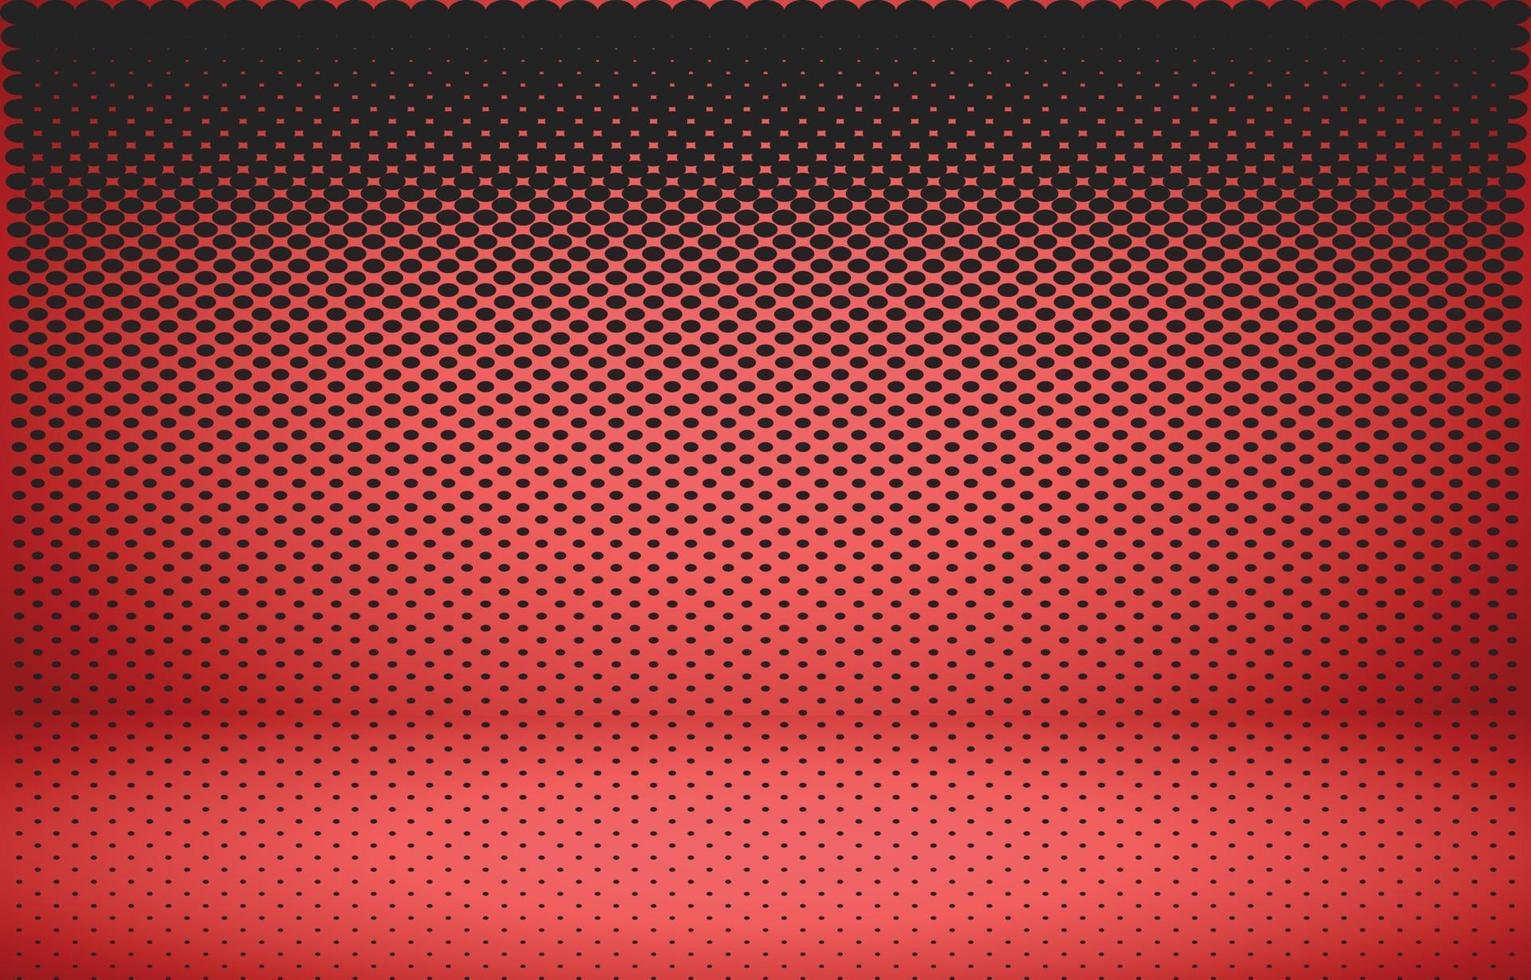 rode studio lege kamer achtergrond vector